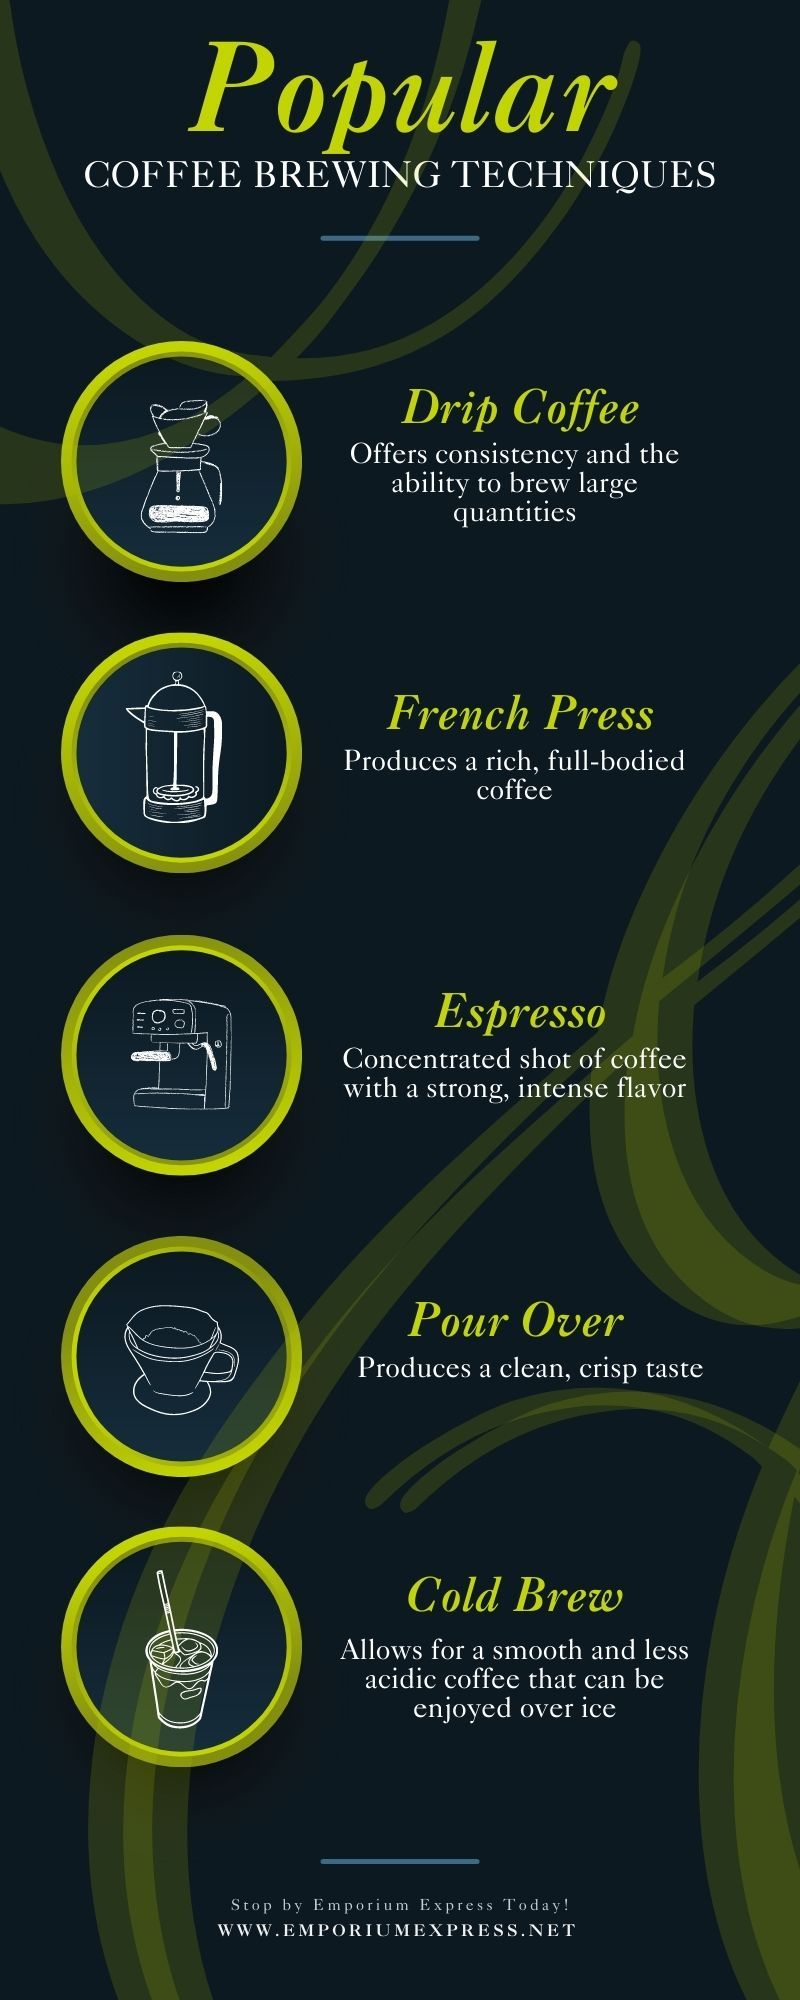 M35989 Popular Coffee Brewing Techniques (1).jpg